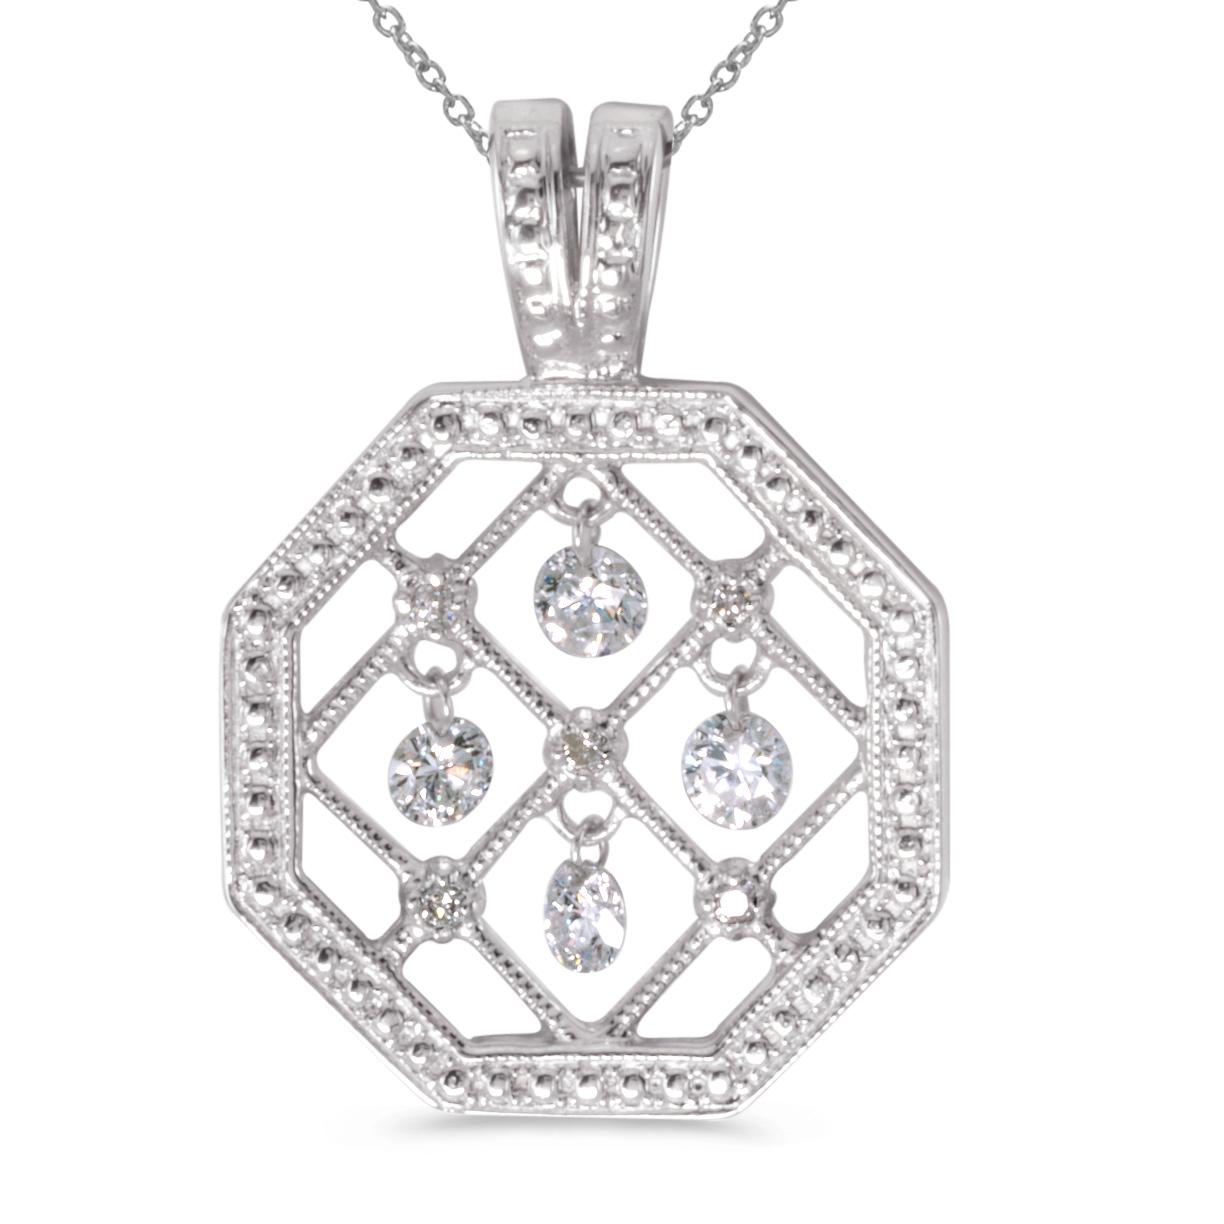 14k gold Dashinng Diamonds pendant with 0.36 total ct diamonds. The center dangling diamond dance...